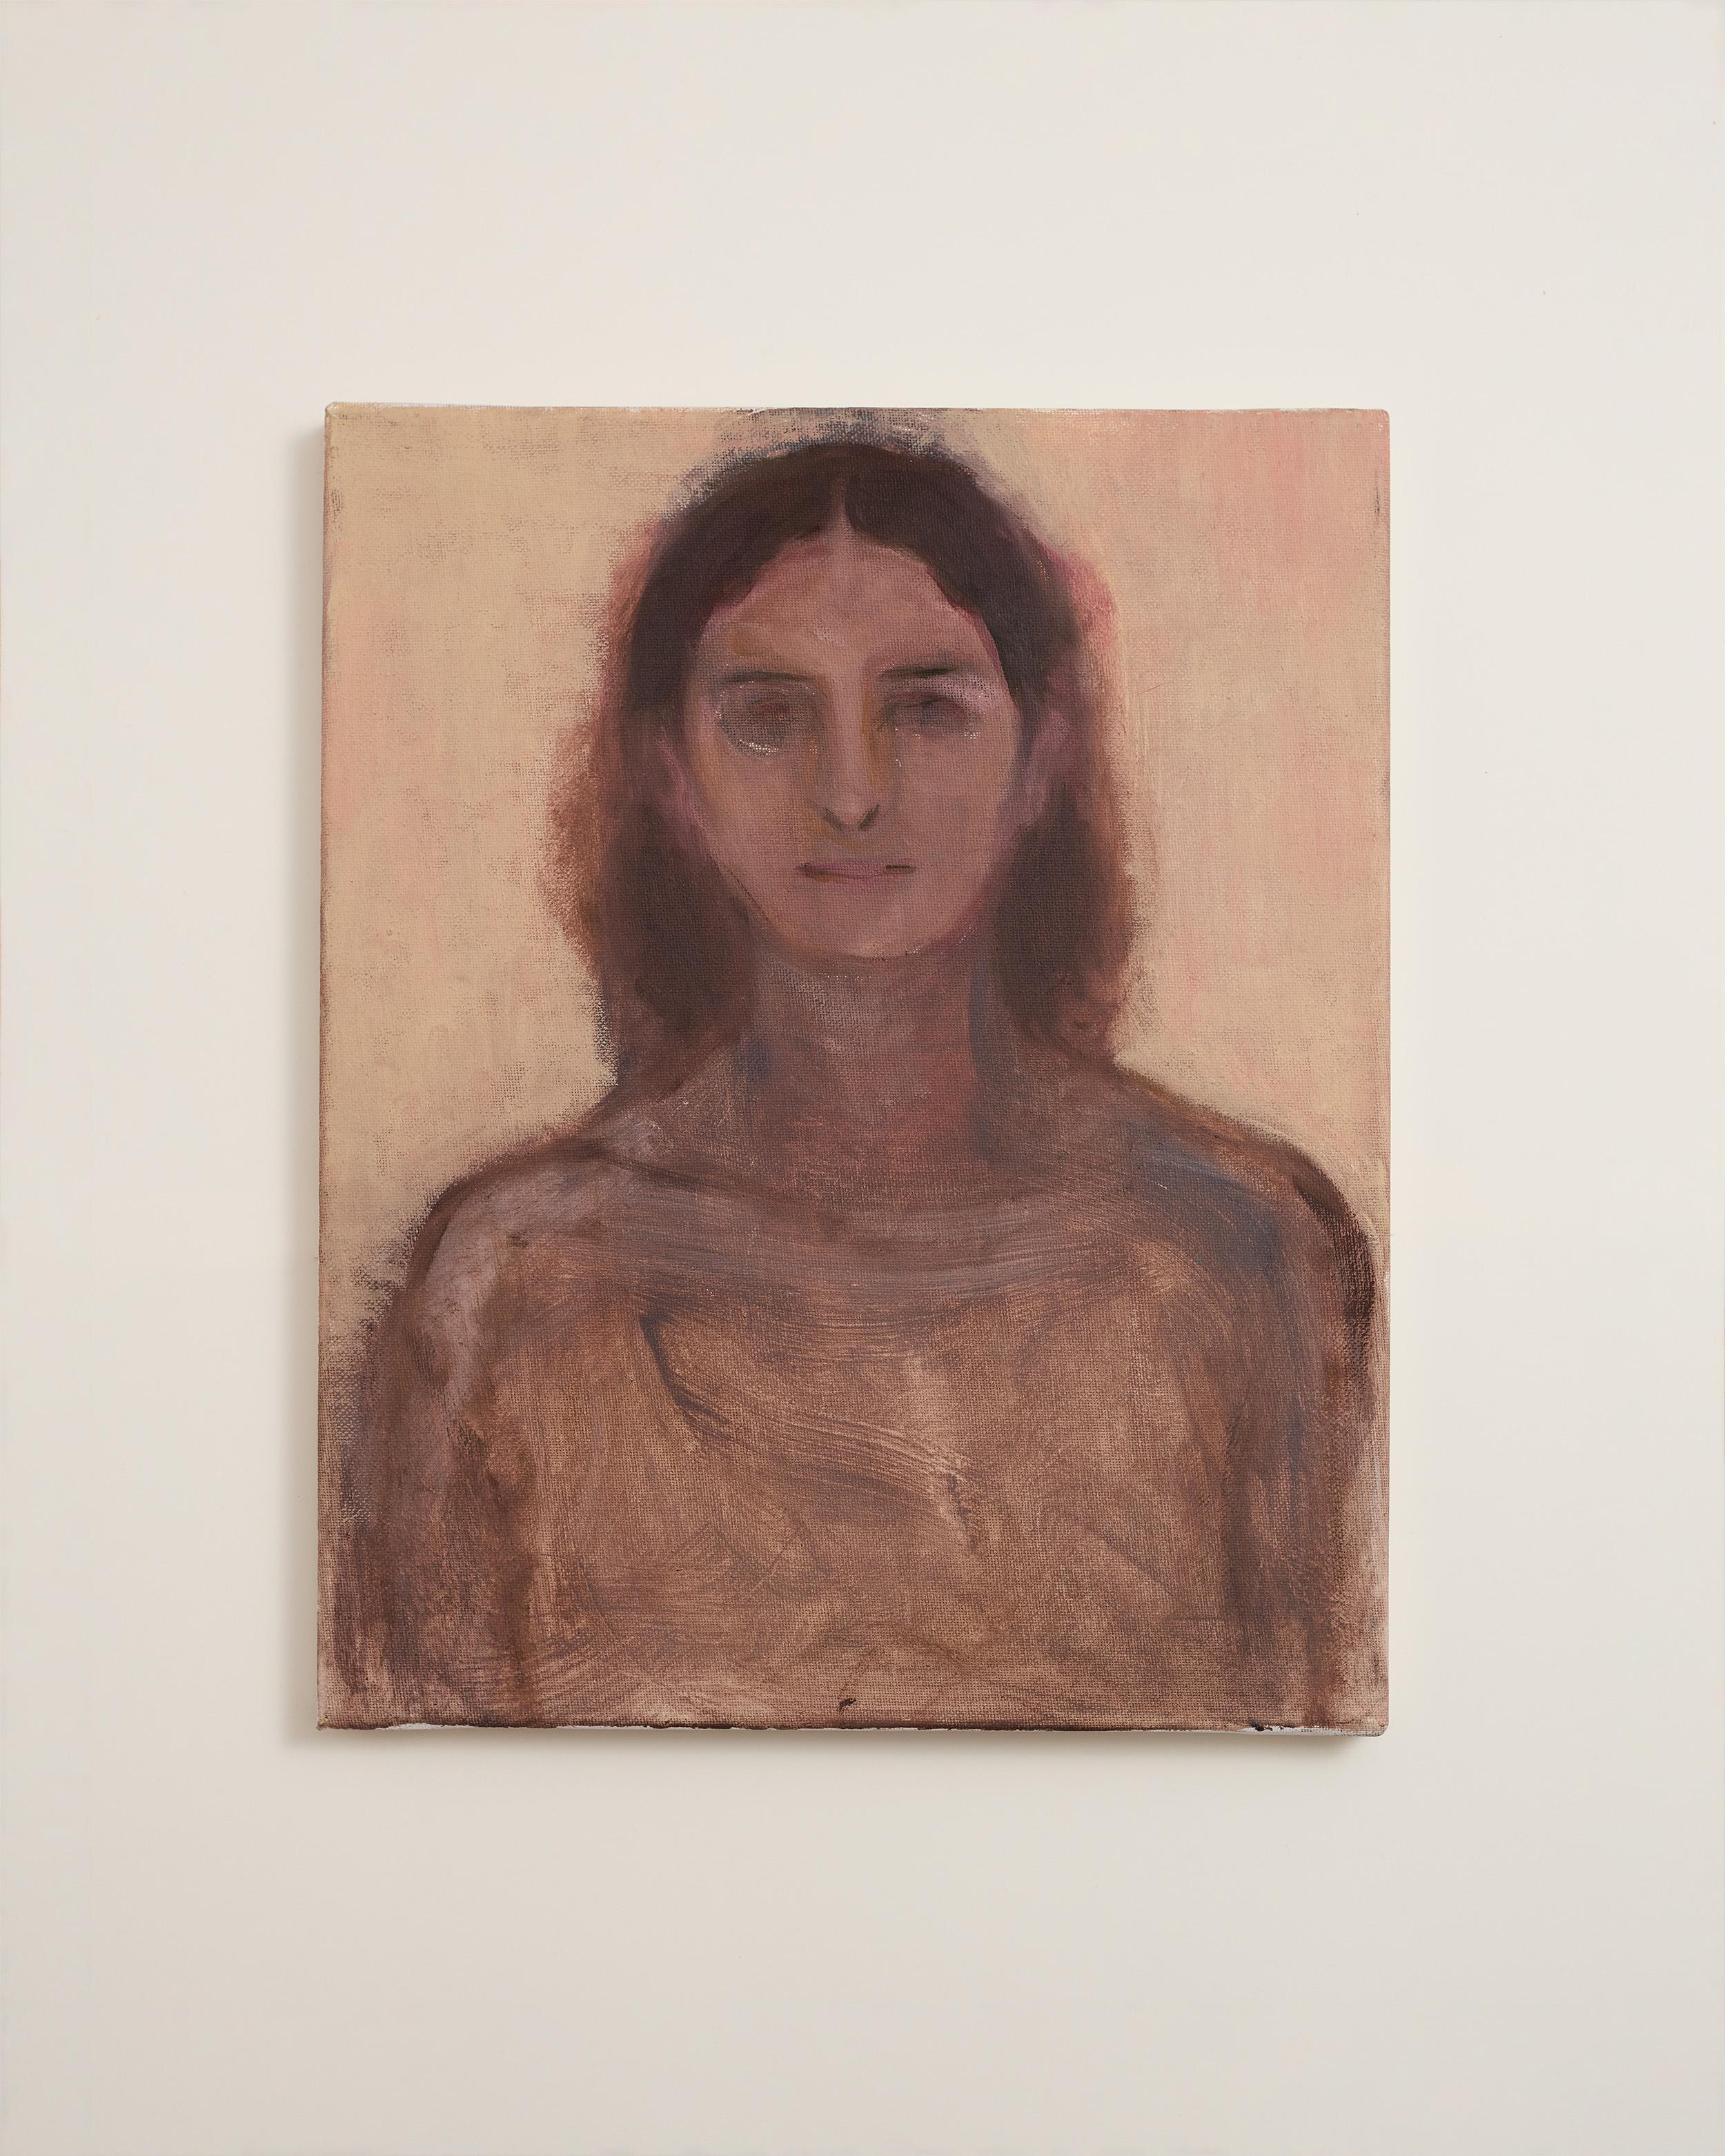 Marina Taleb Portrait Painting - Desert froid - Contemporary Oil on Canvas Portrait